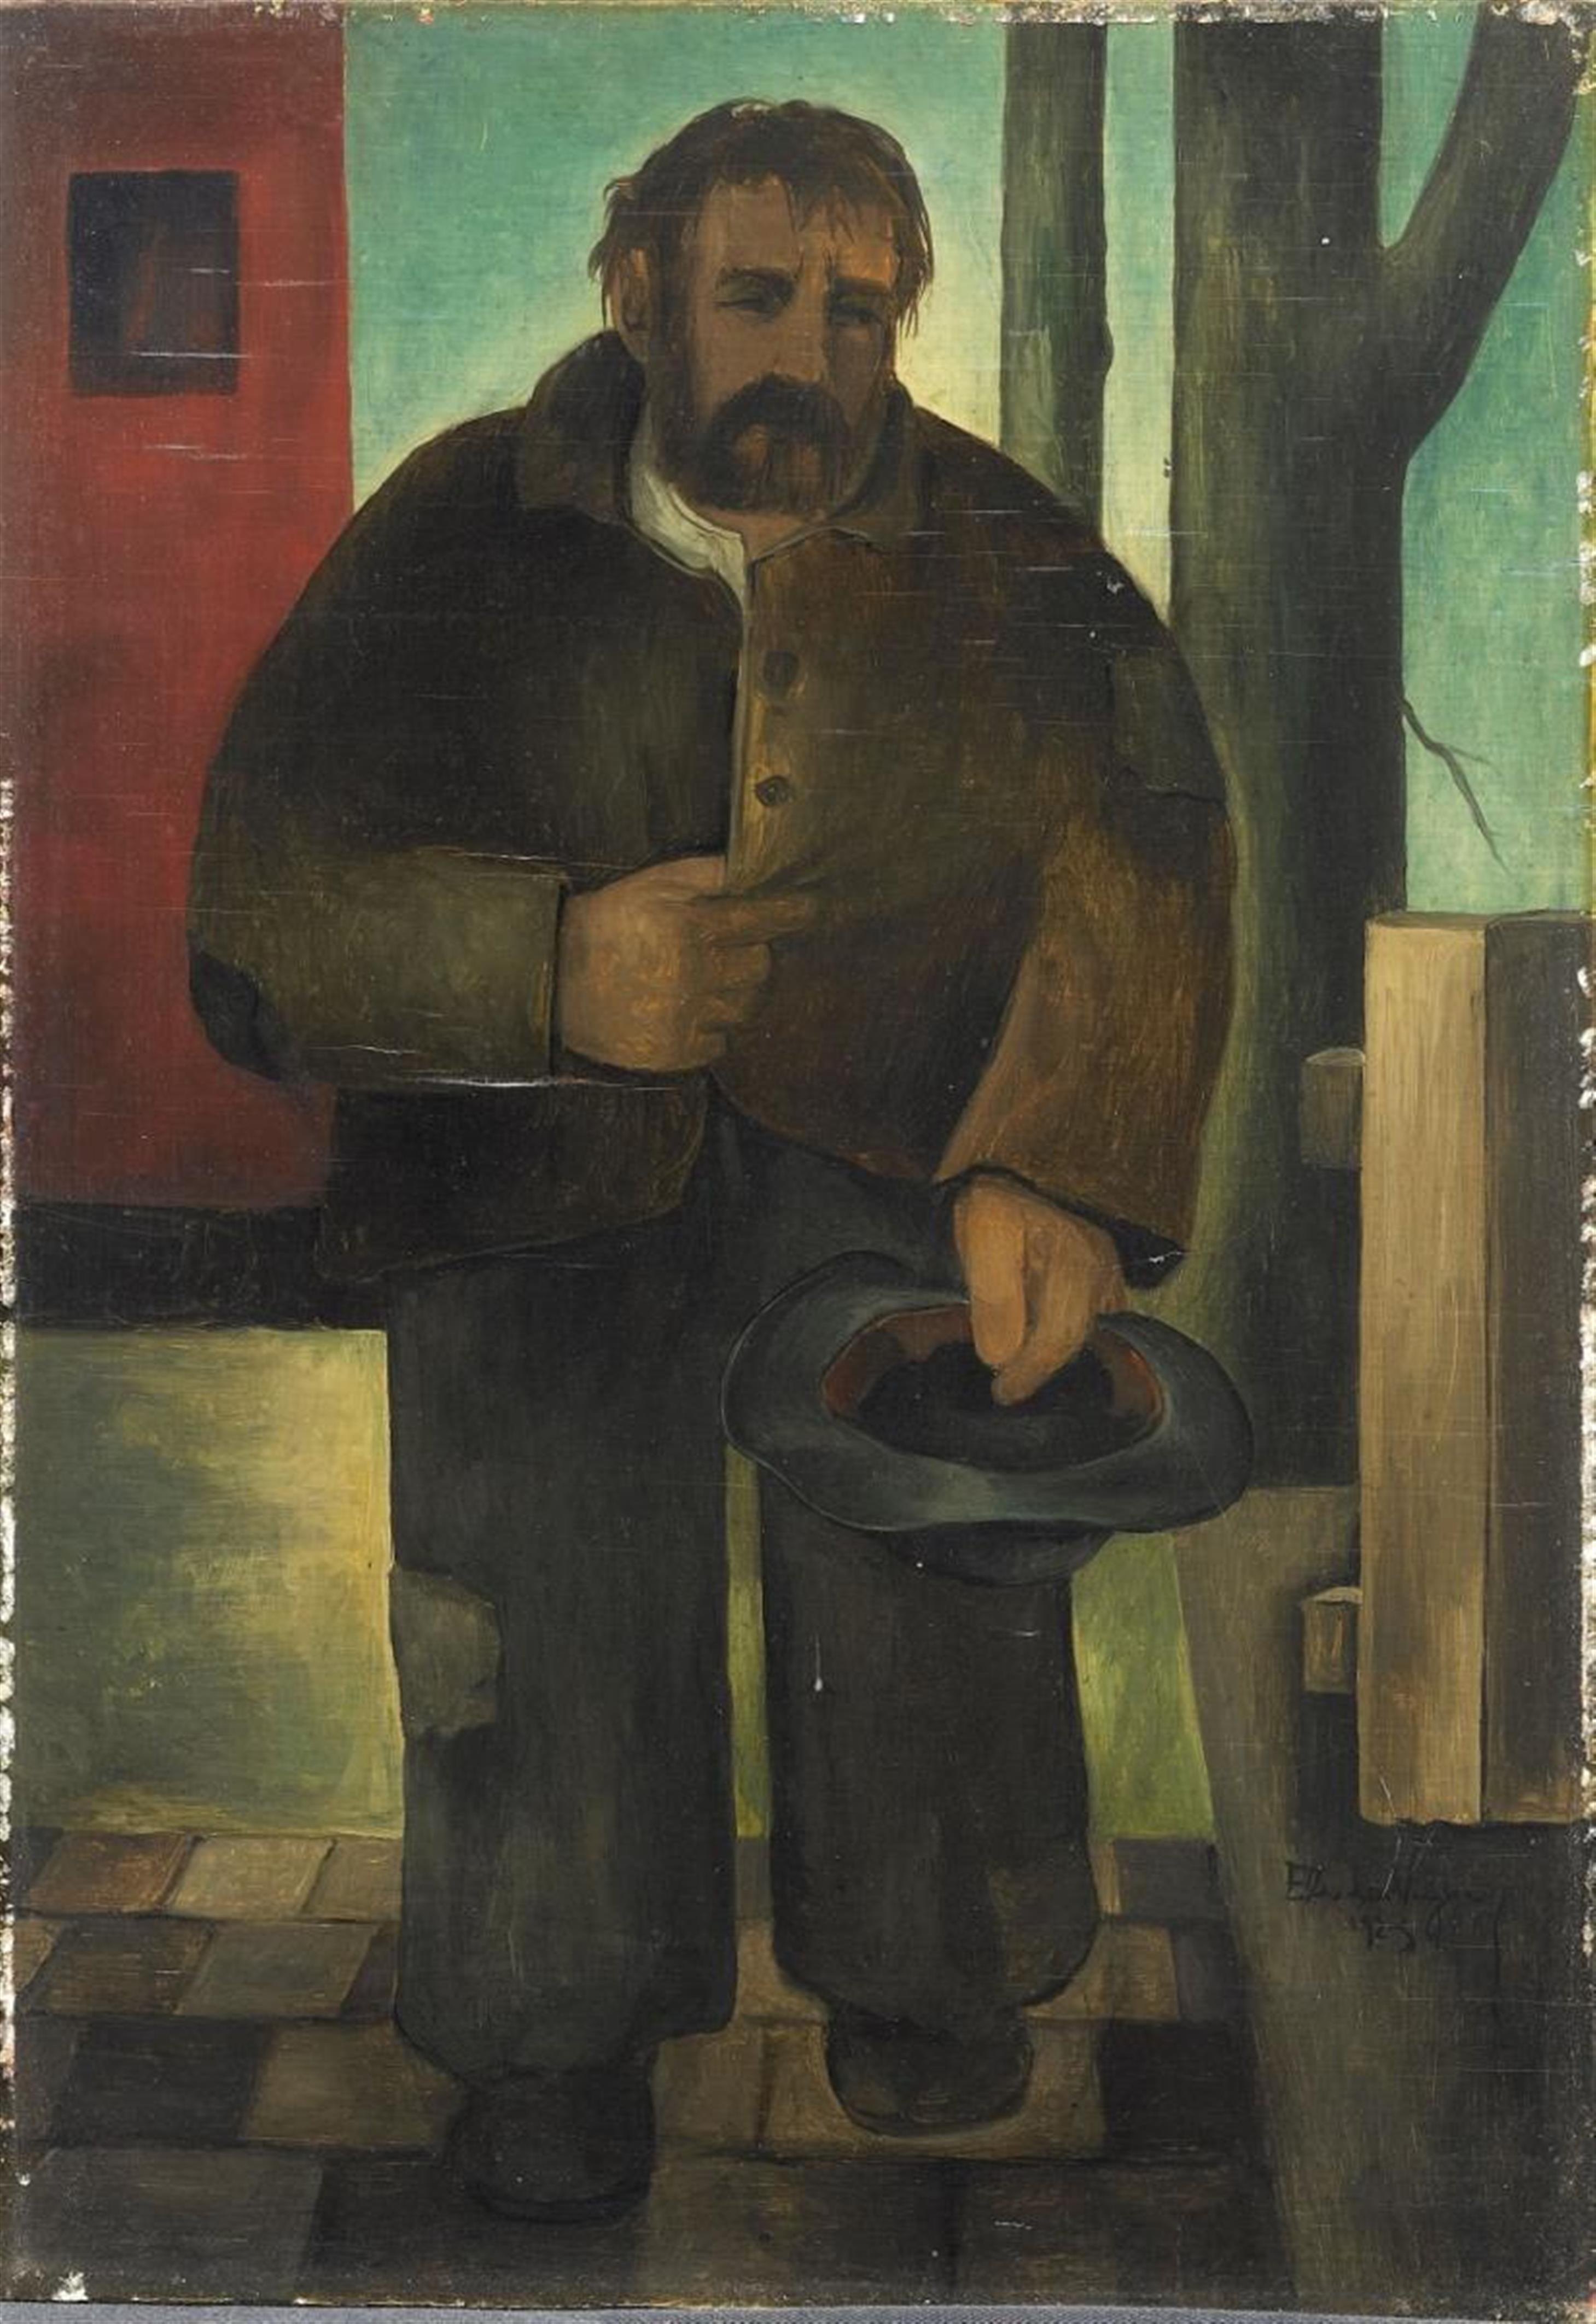 Eberhard Viegener - Stehender Bettler (Standing Beggar) - image-1